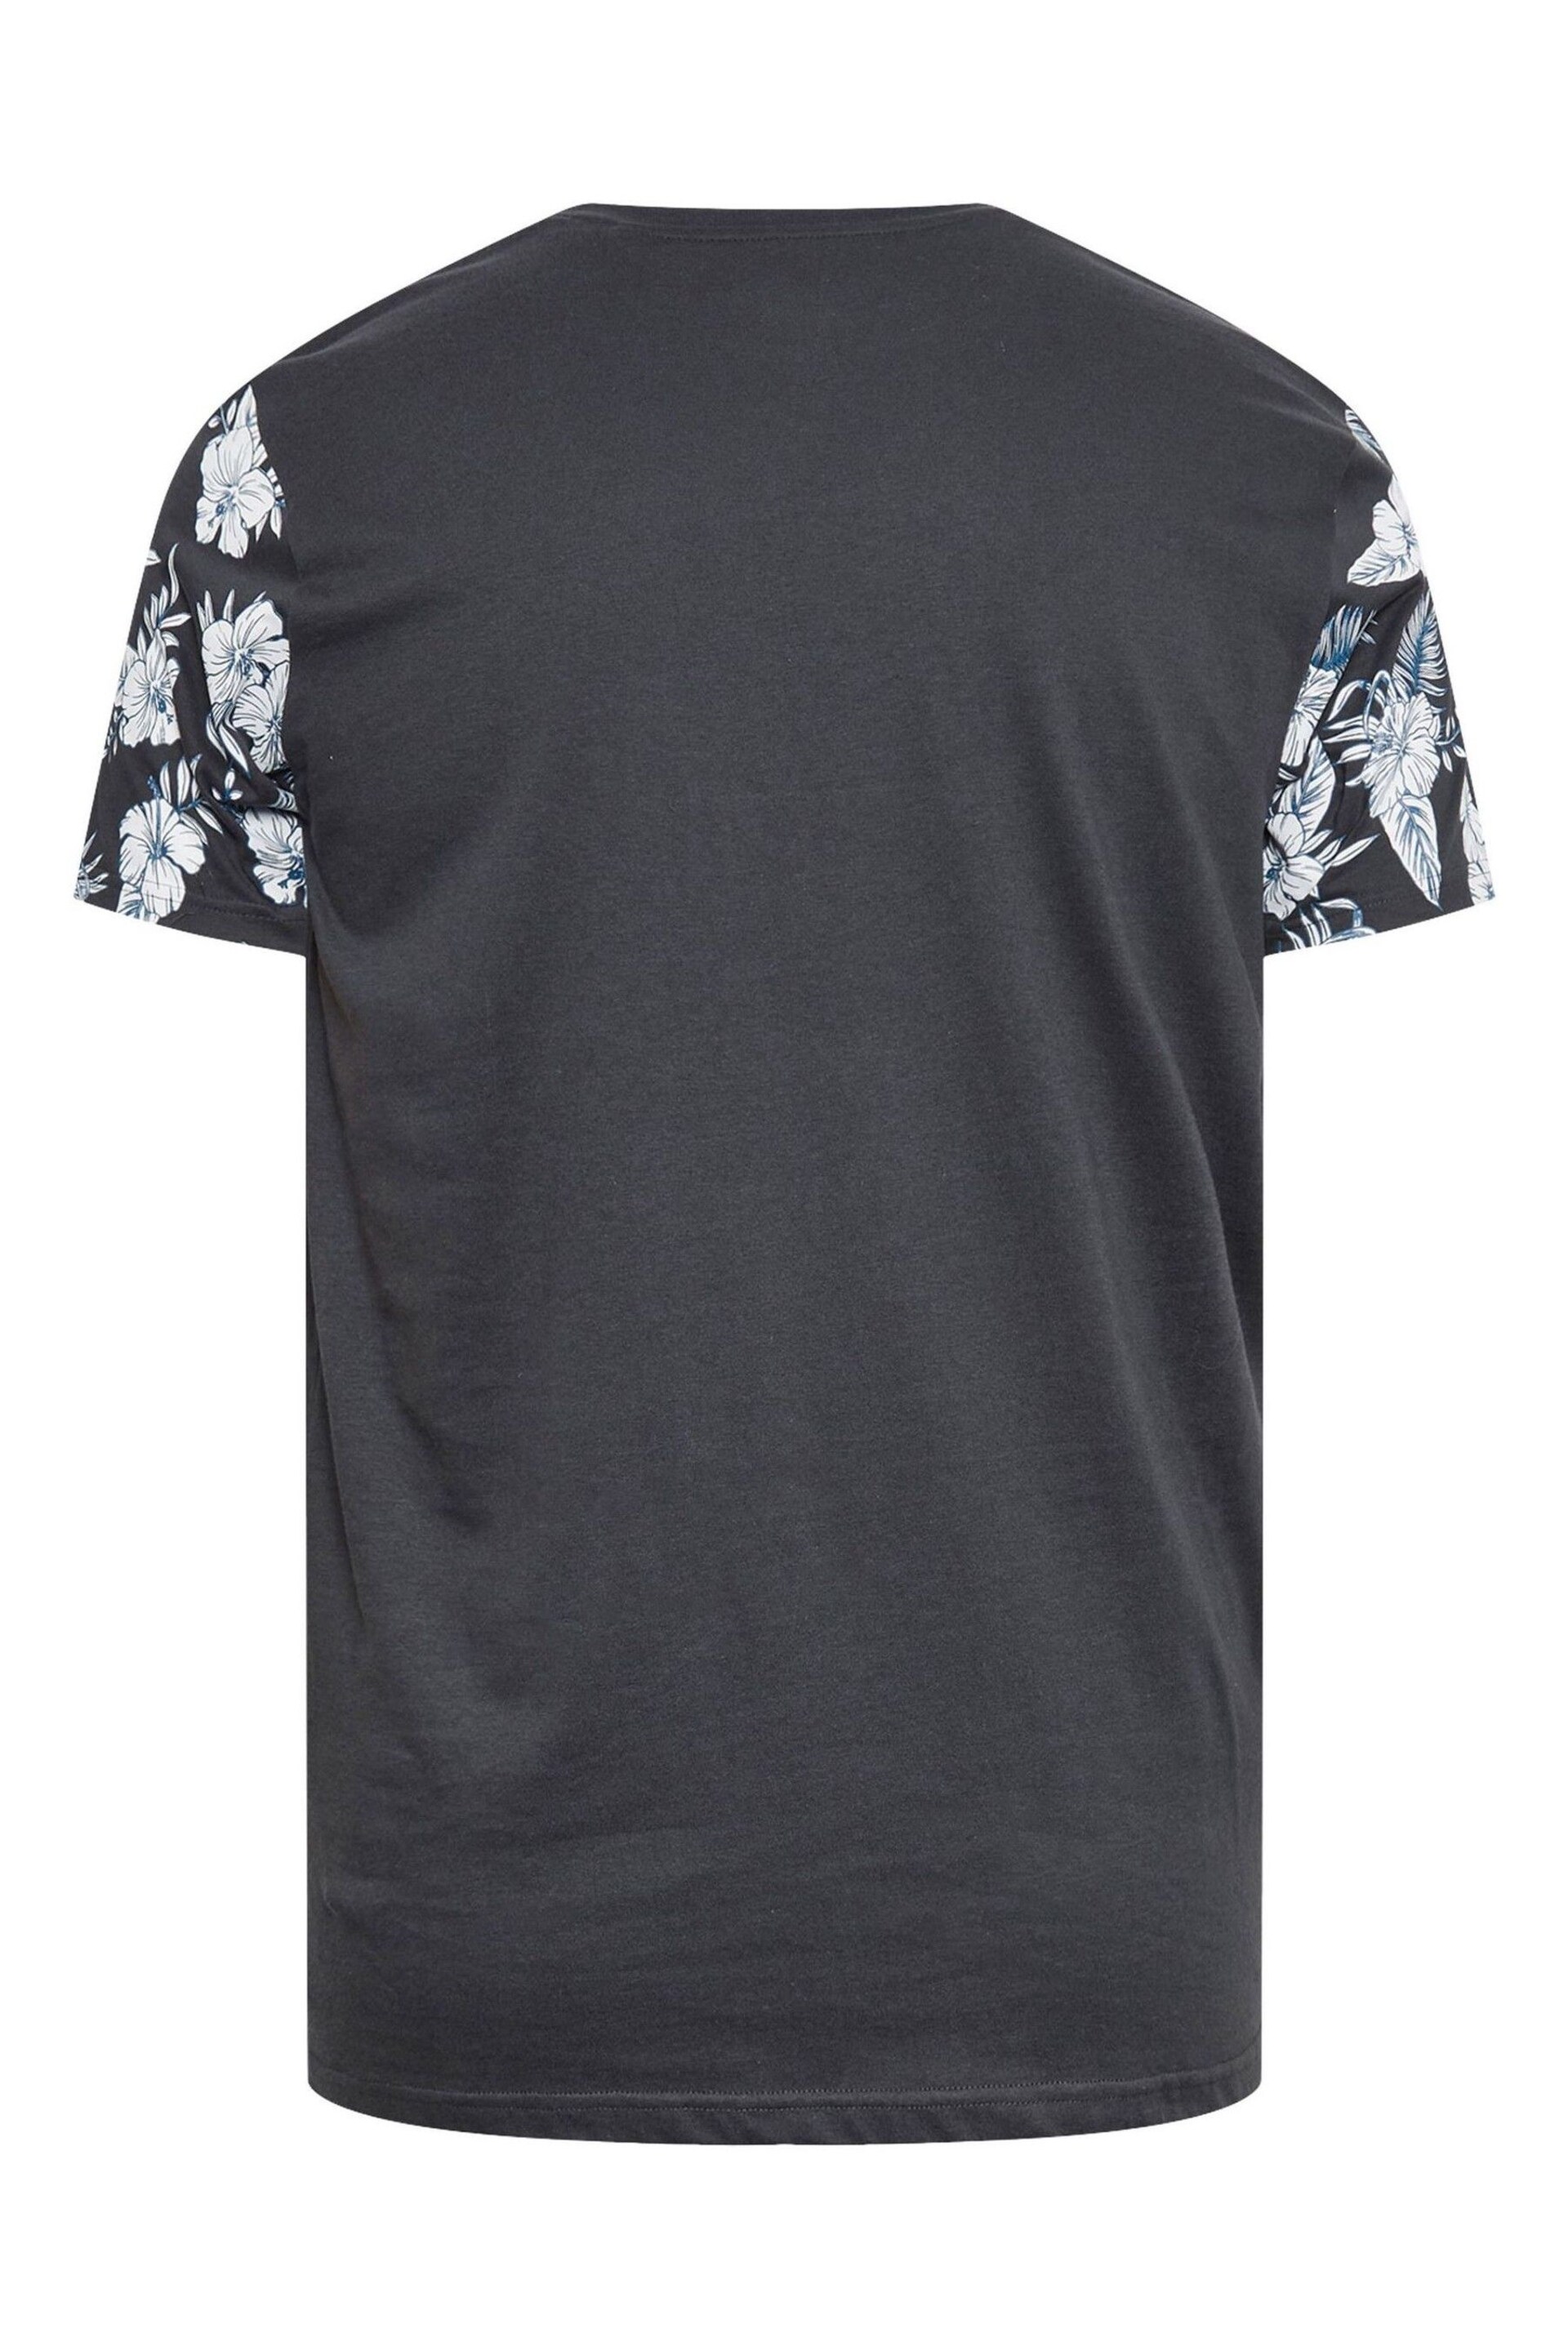 BadRhino Big & Tall Grey Border T-Shirt - Image 3 of 3